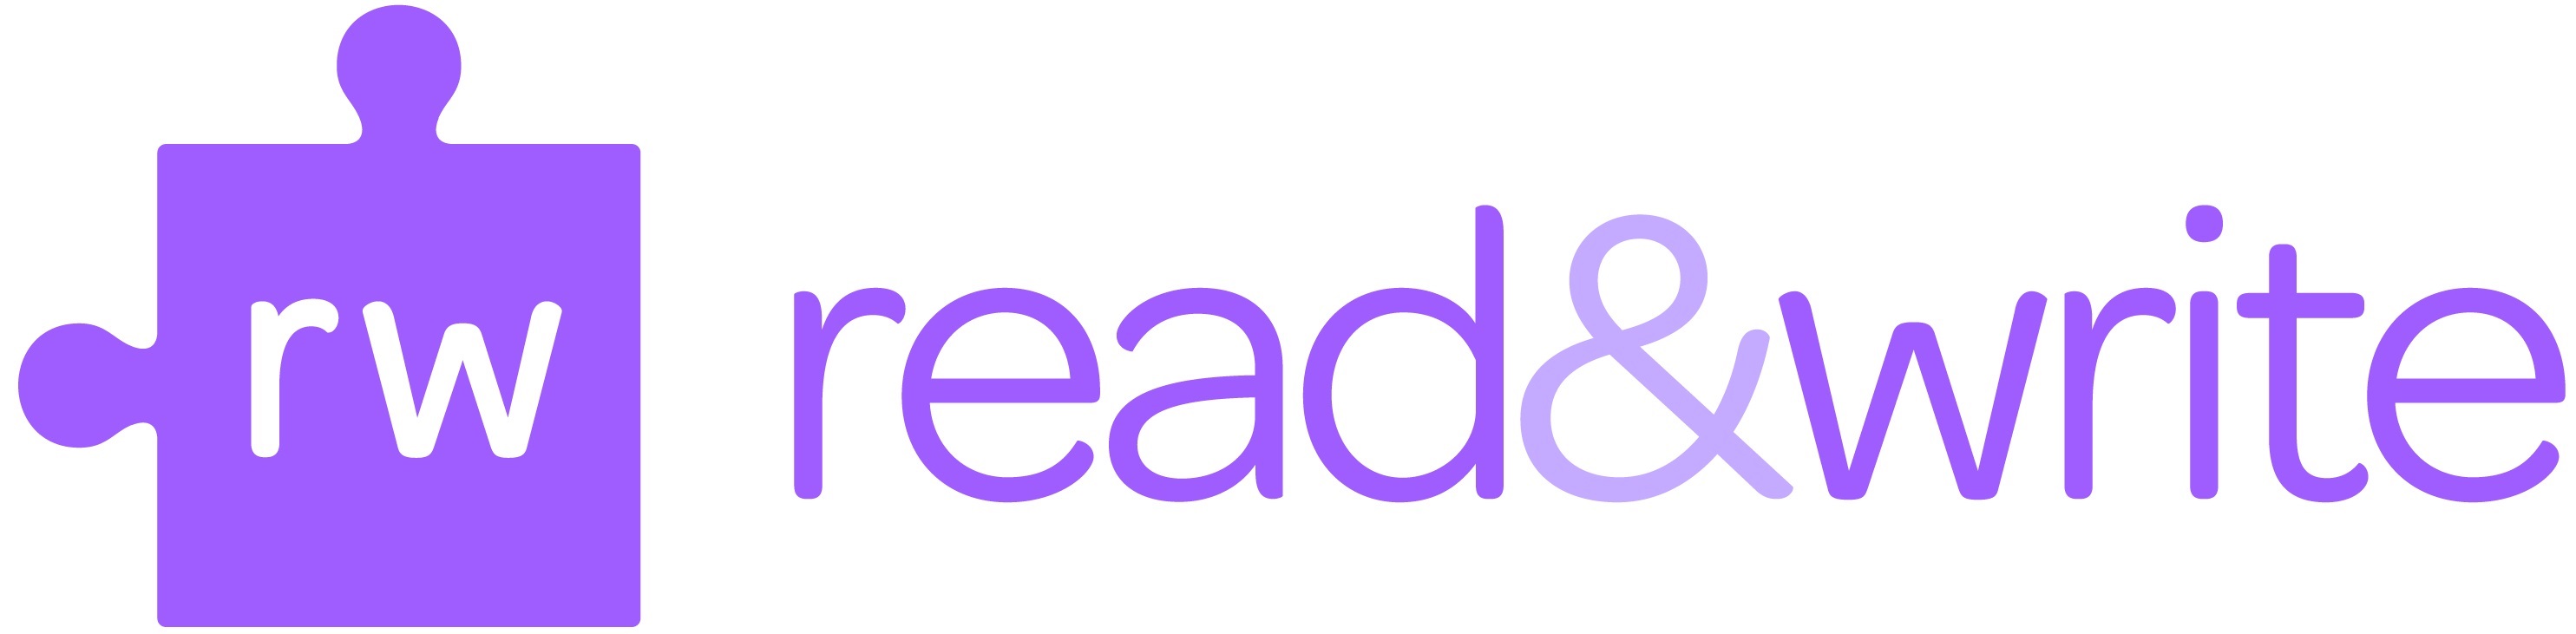 Read&Write Logo